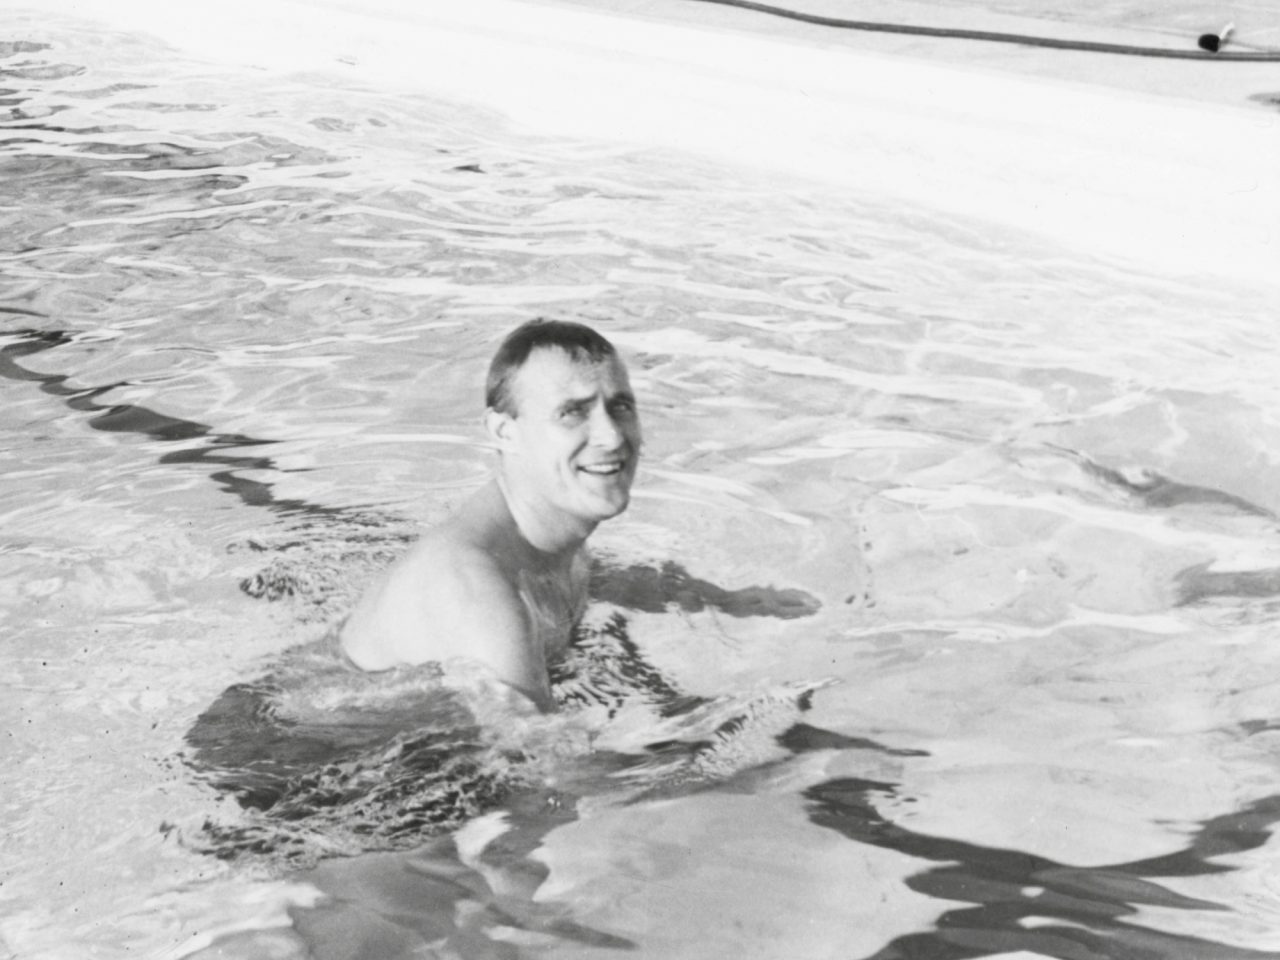 Smiling man in his 30s, Ingvar Kamprad, bathing in swimming pool.